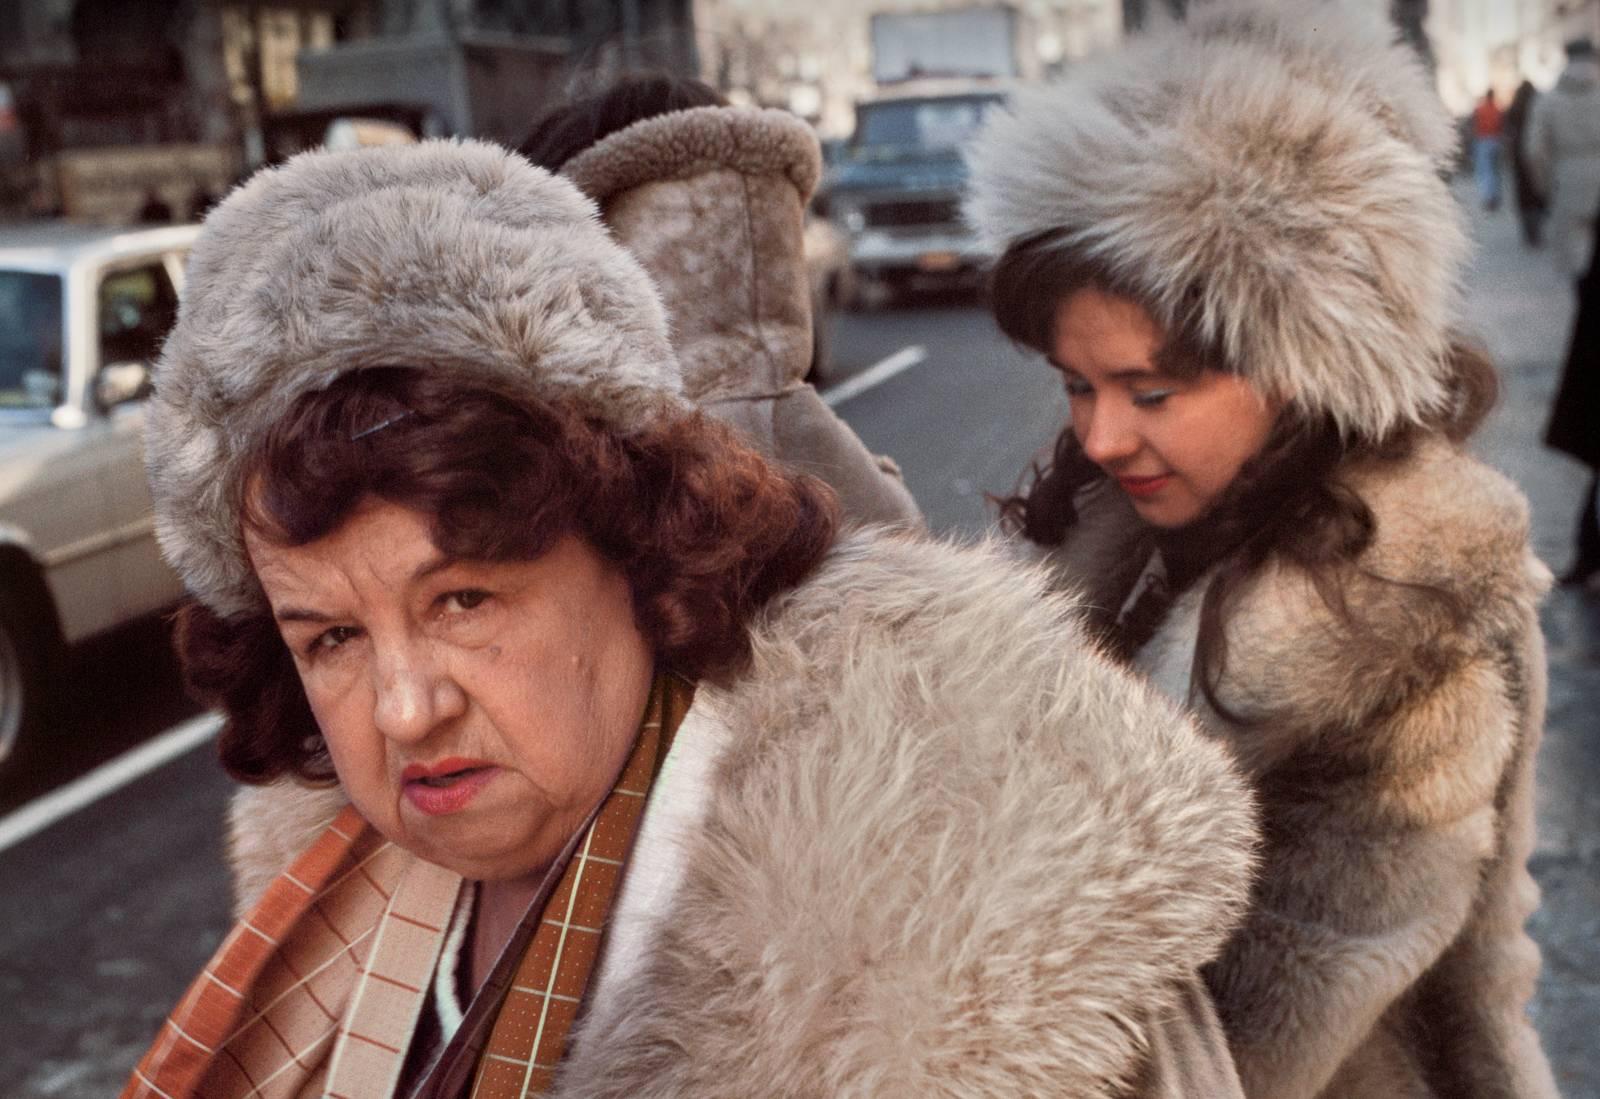 Fur, New York, NY 1981 - Photograph by Robert Herman